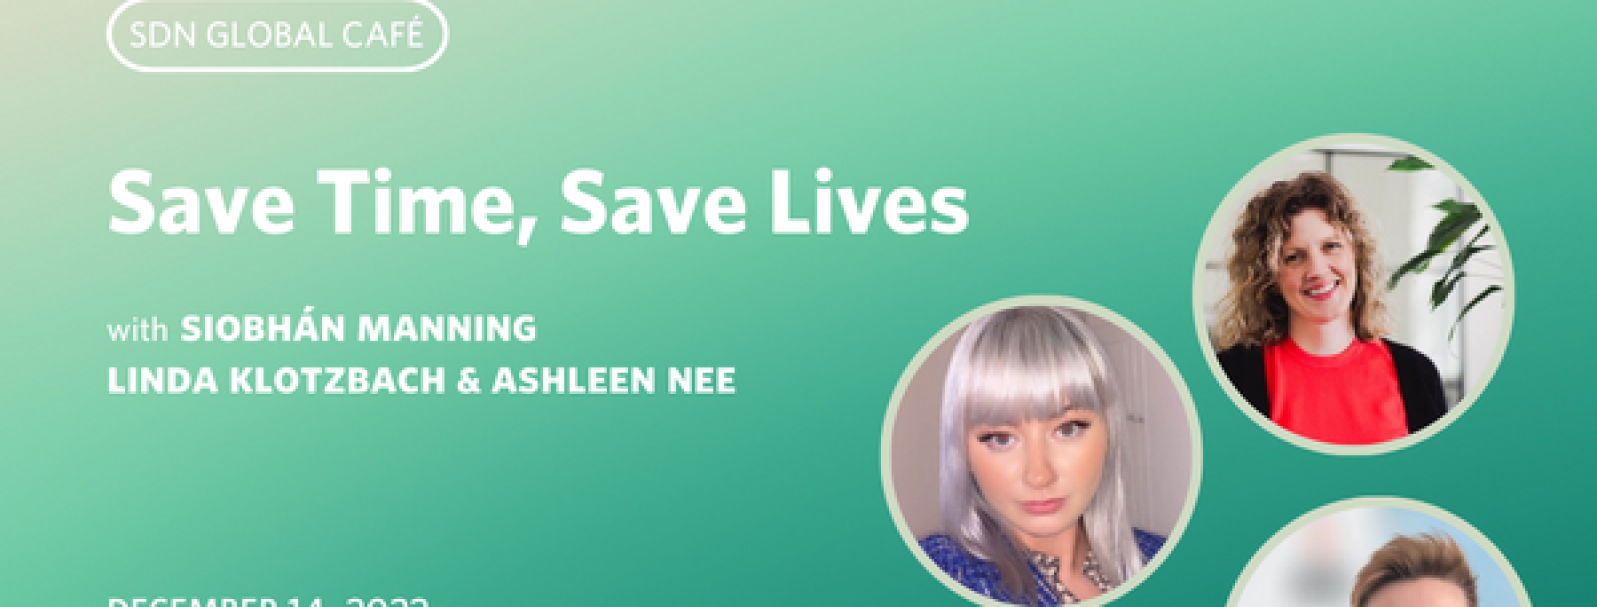 SDN Global Café - Save Time, Save Lives